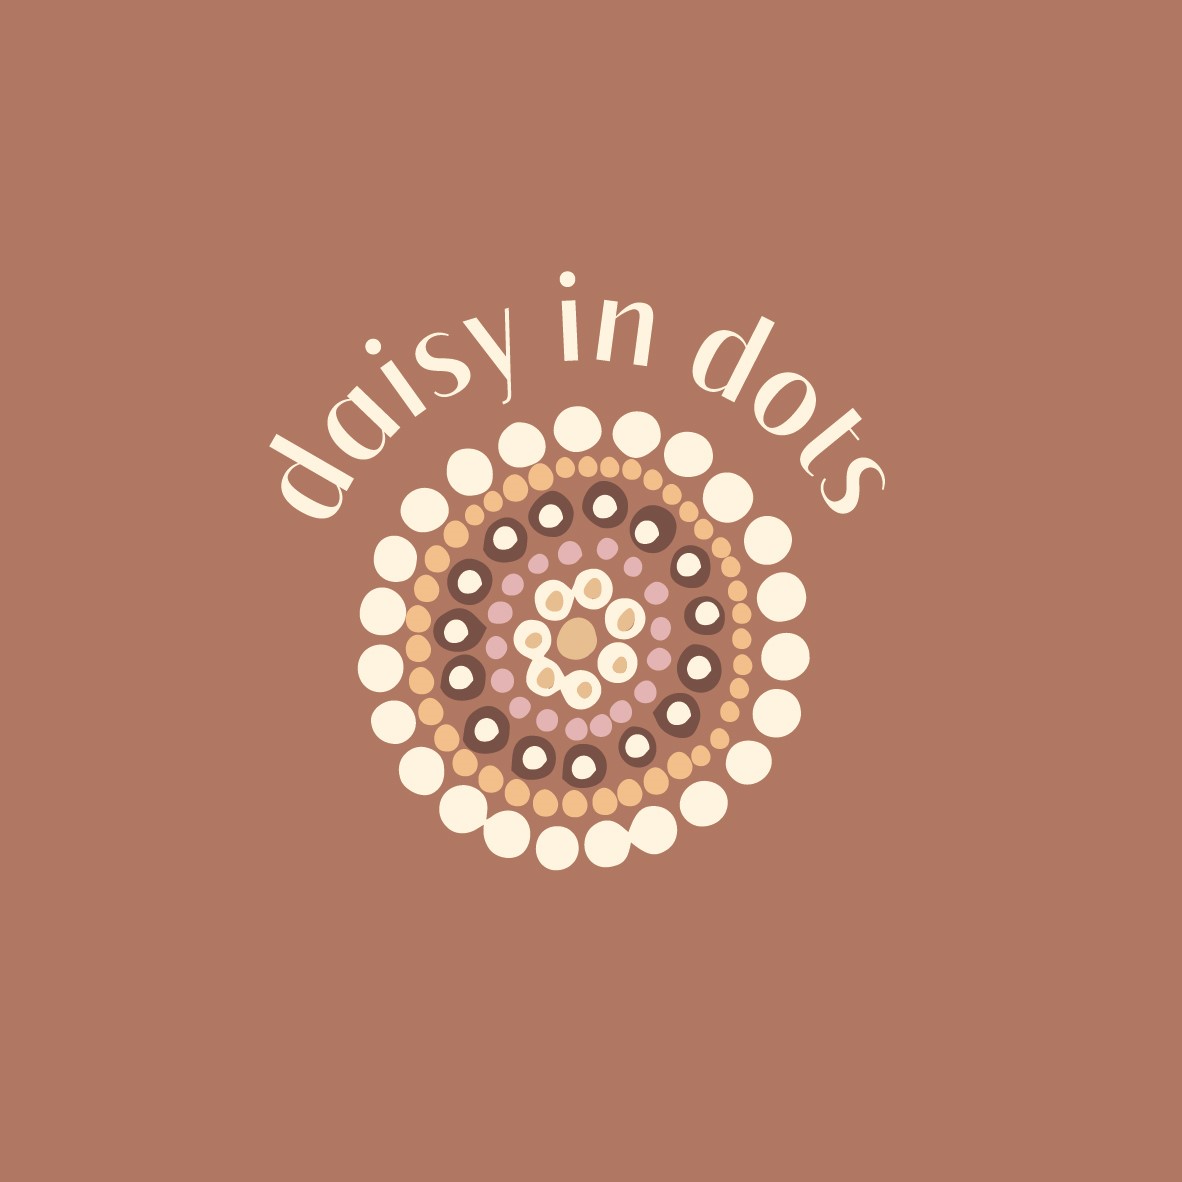 Daisy in Dots Canvas Art Prints